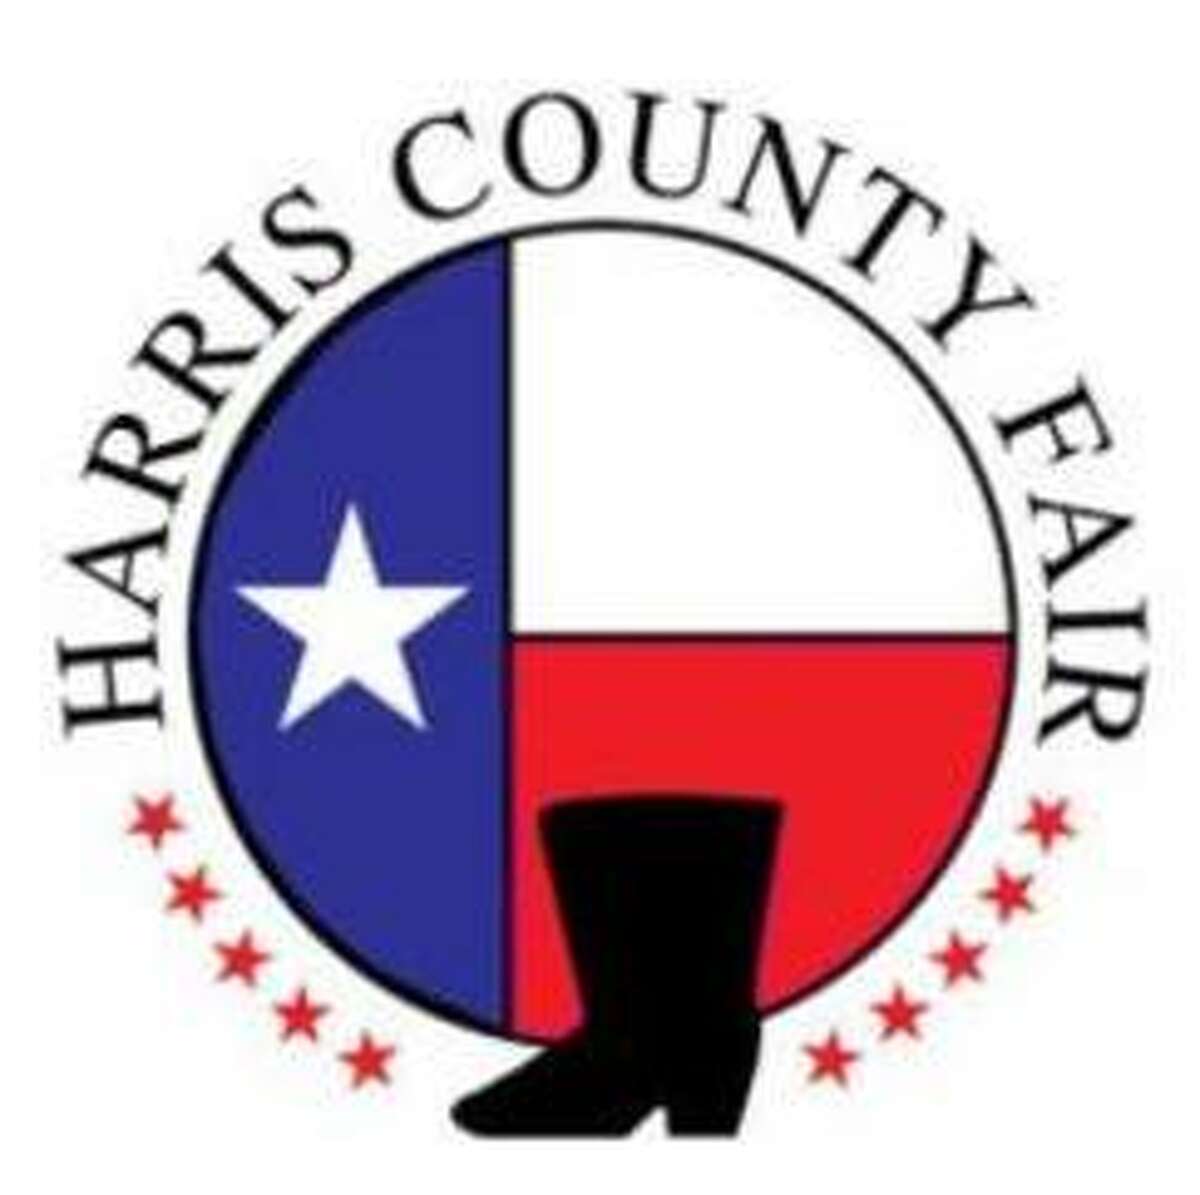 Harris County Fair ends 40year run at Bear Creek Pioneers Park